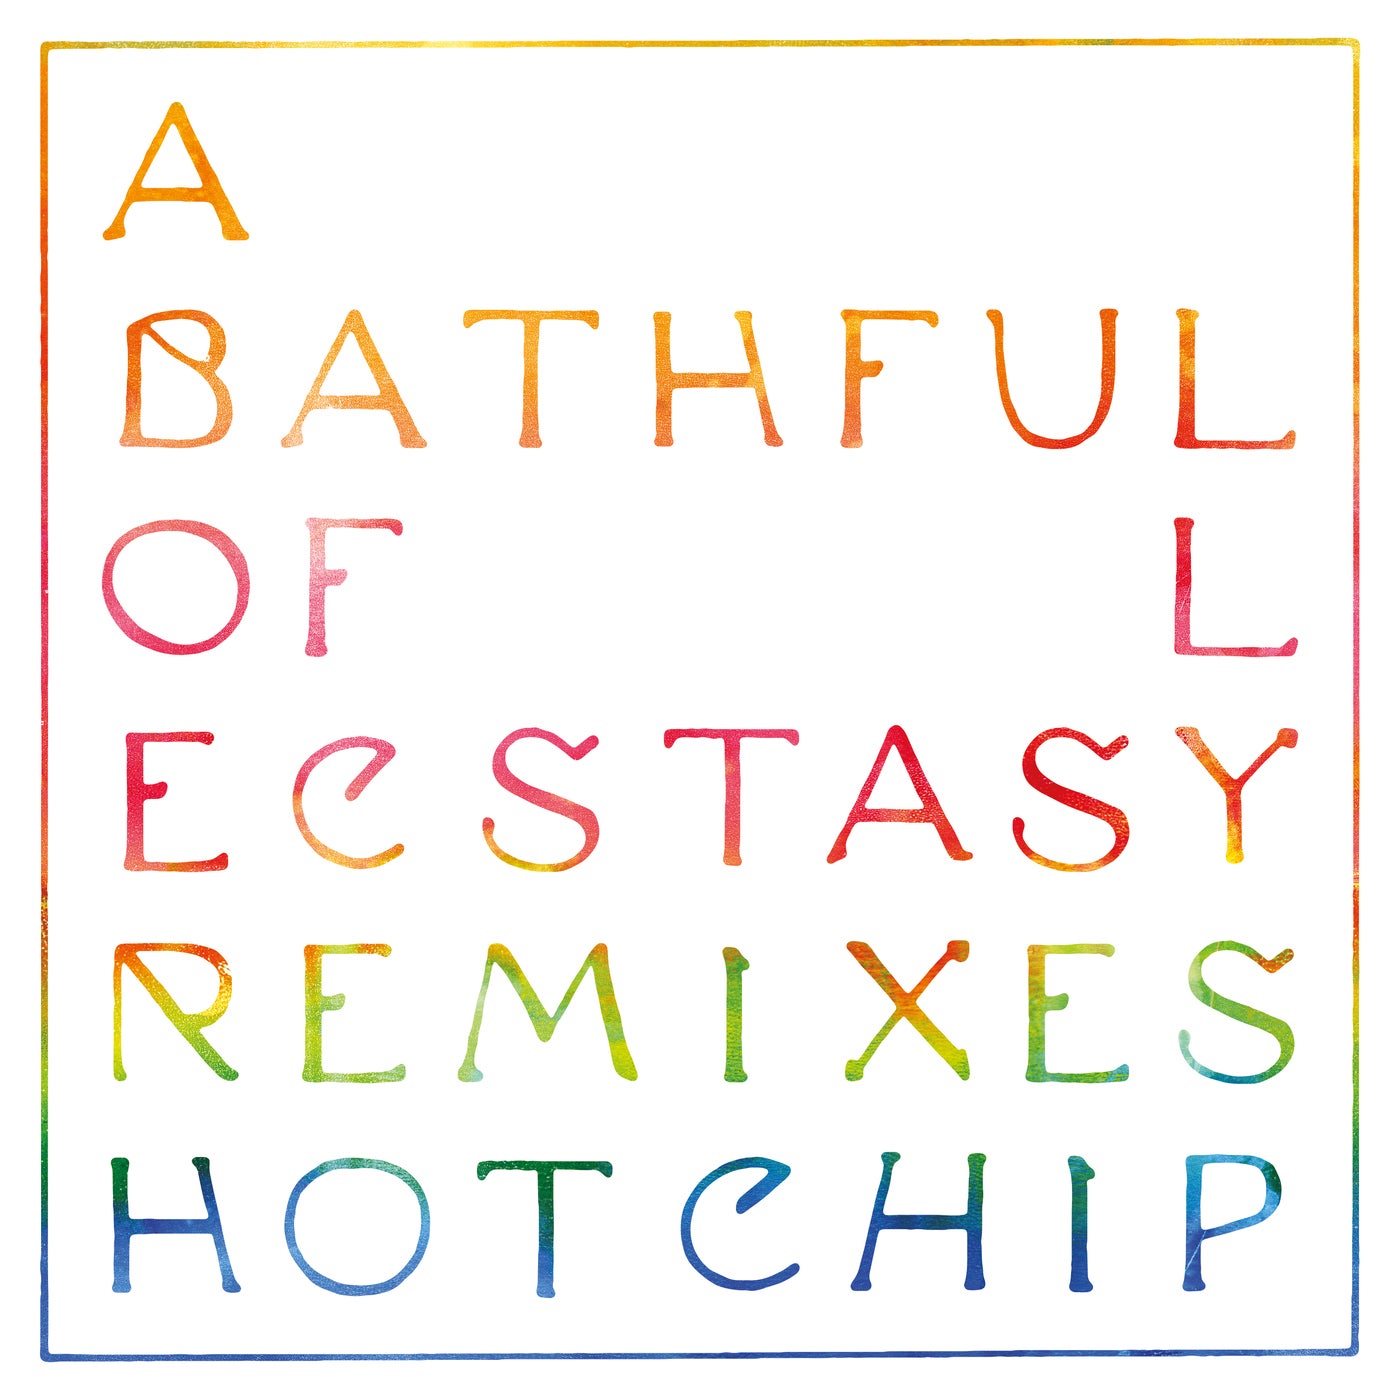 A Bath Full of Ecstasy - Remixes